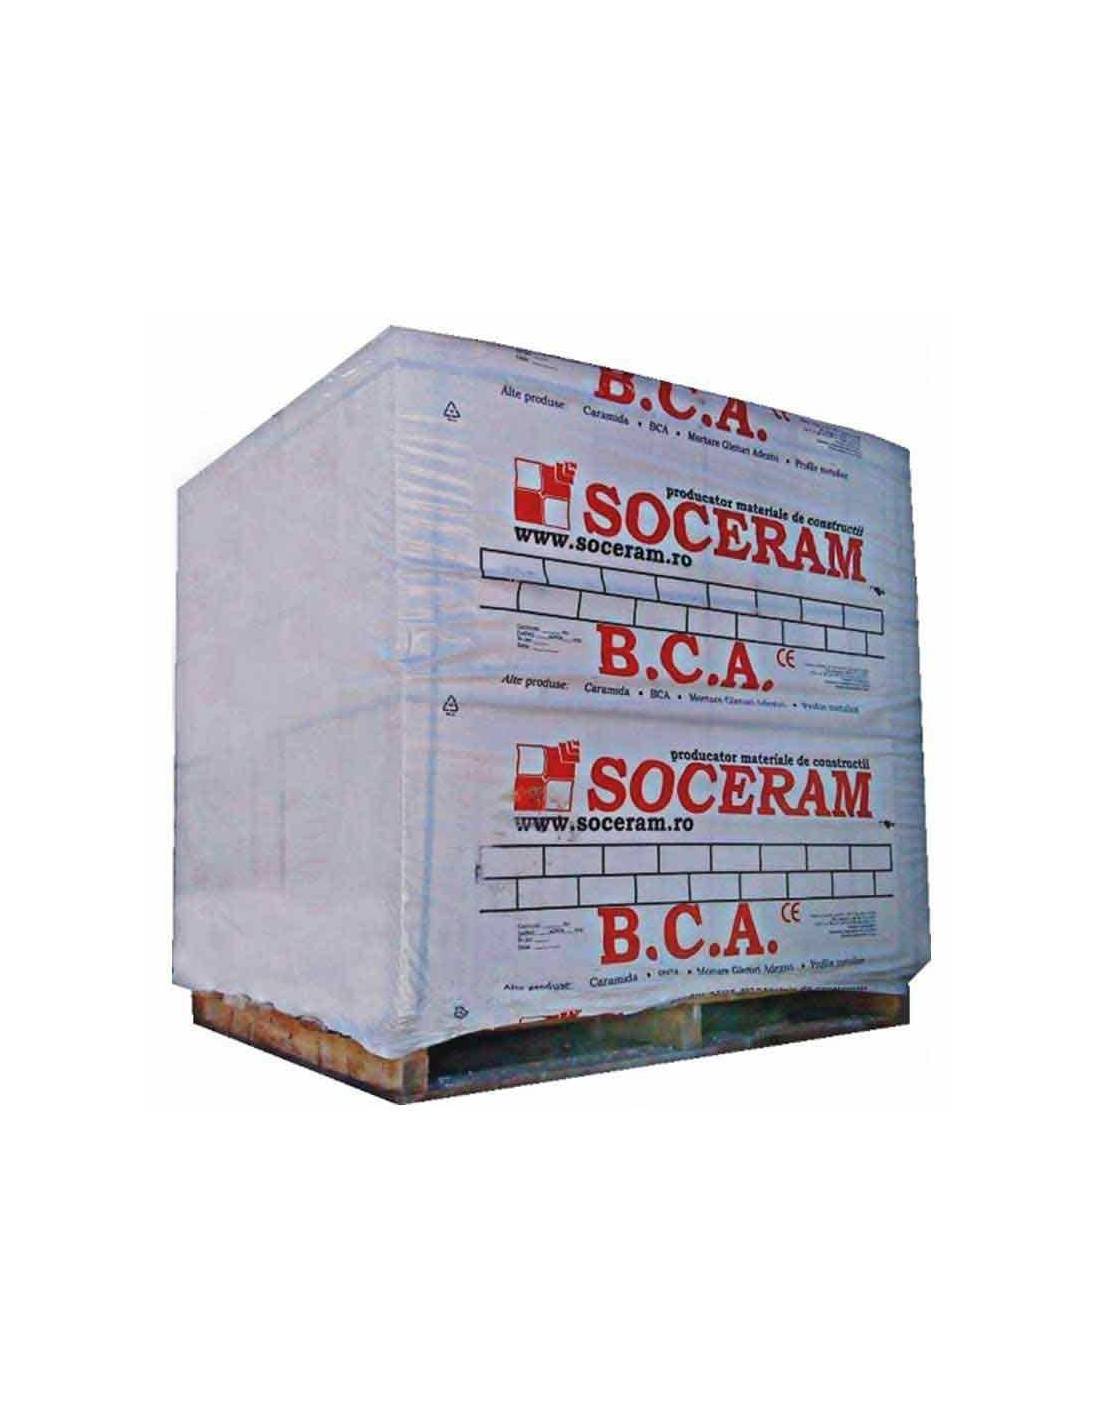 BCA Soceram 20X24X65, 284.49 Lei - pret mic livrare rapida din stoc